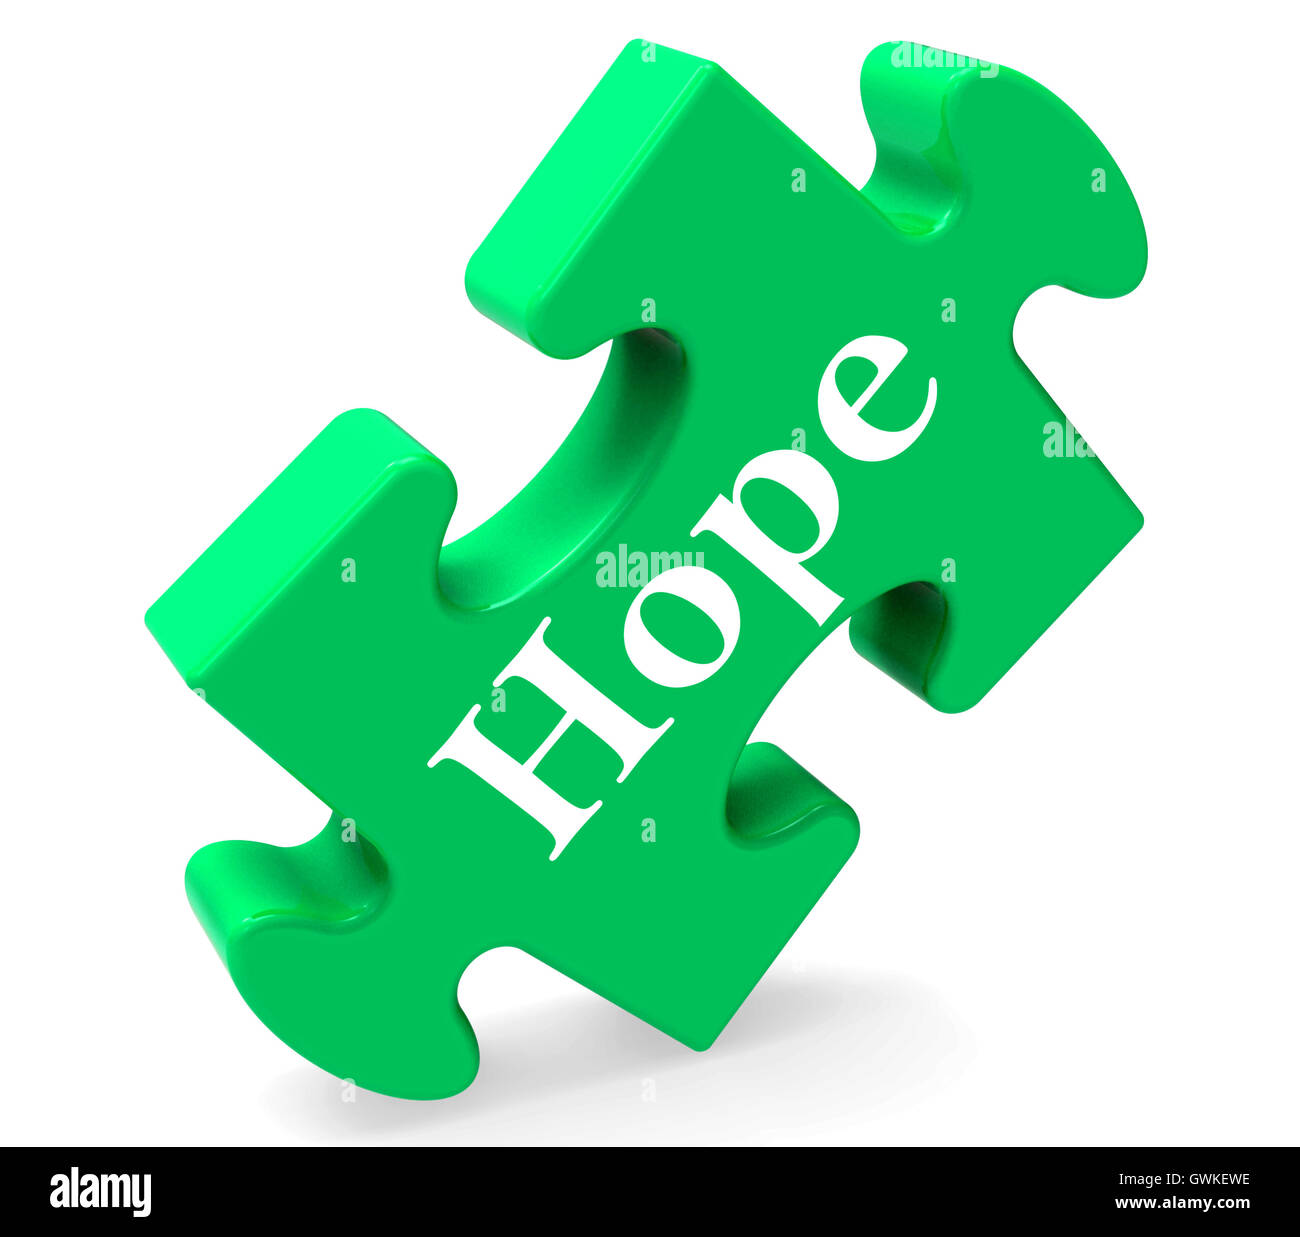 Hoffnung-Puzzle zeigt Hoffnung Hoffnung Wünsche oder Wunschdenken Stockfoto